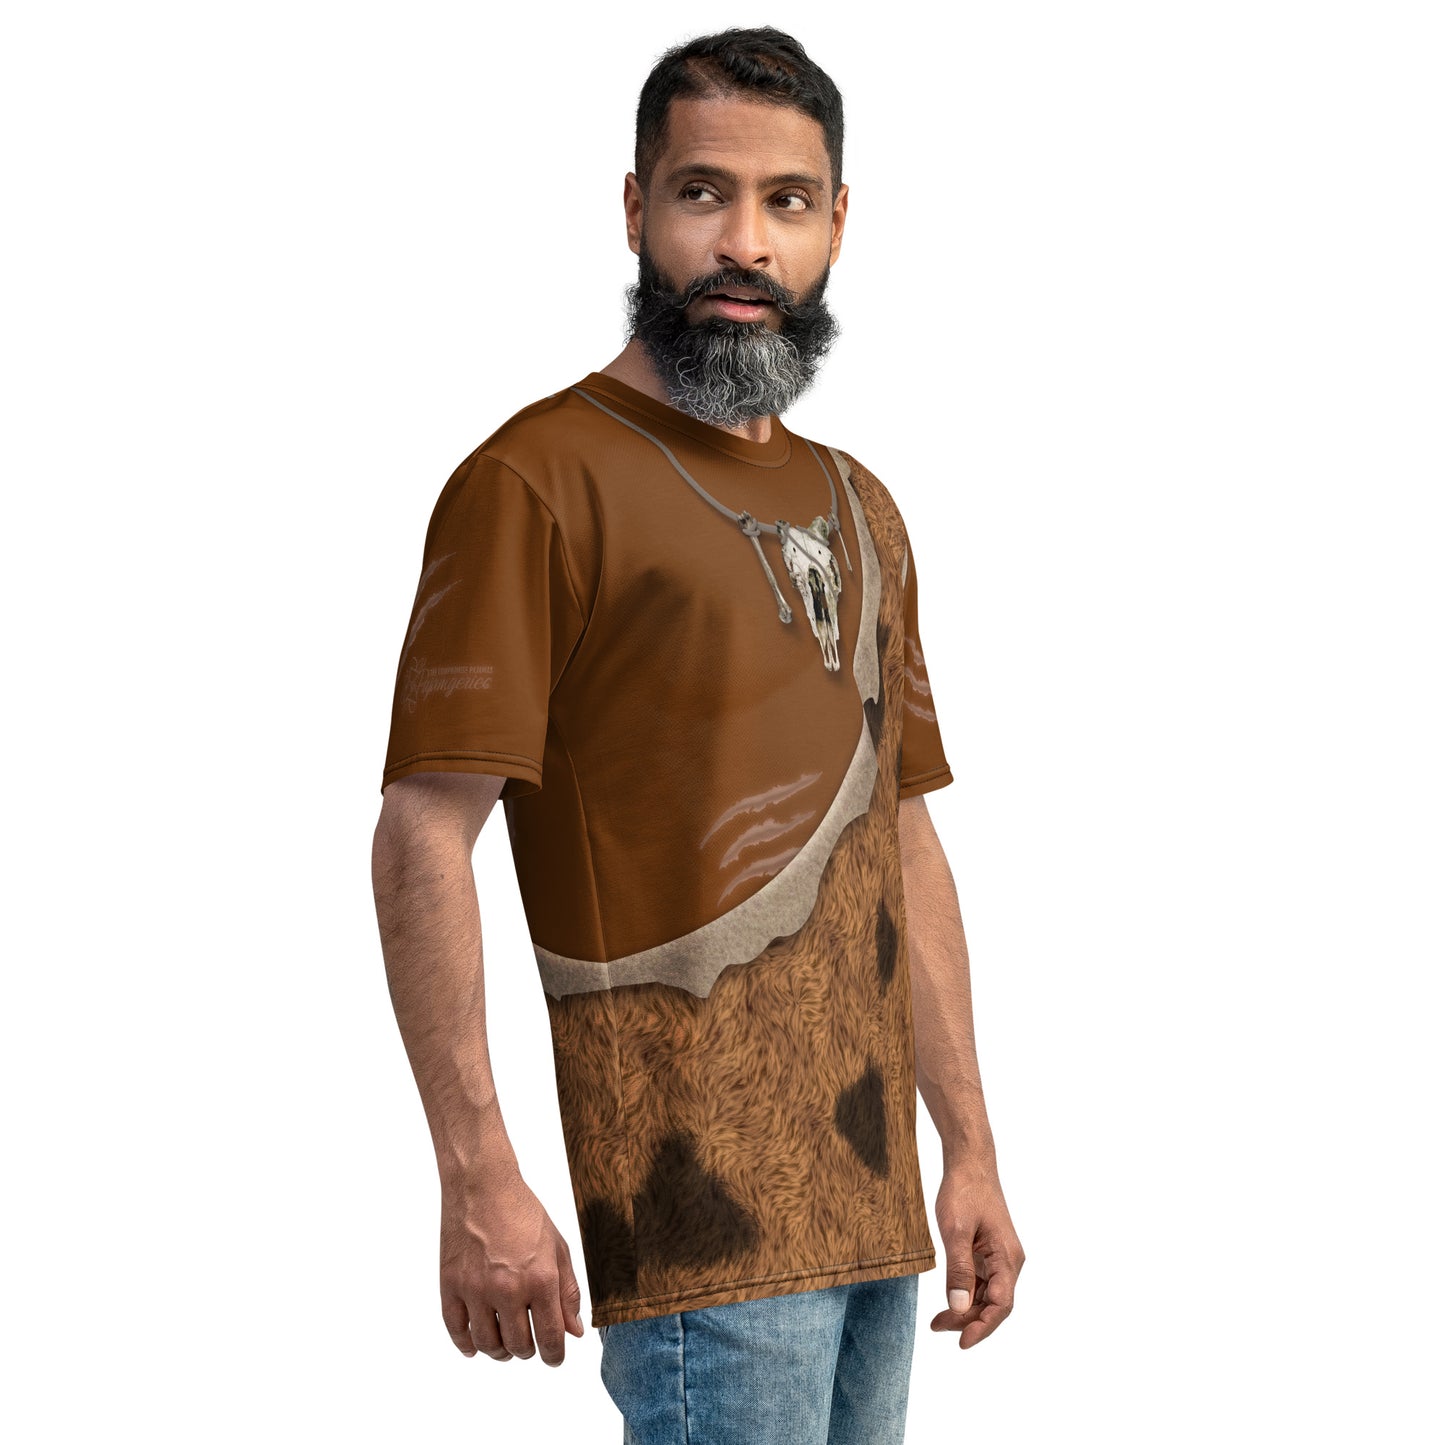 Pajamgeries Men's T-shirt - Caveman - Canela